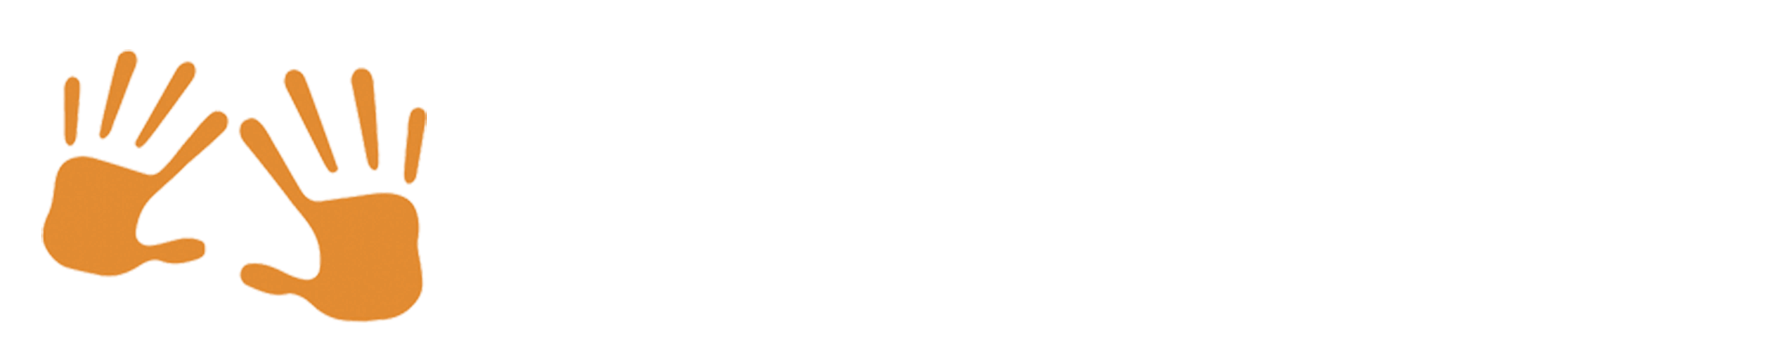 PGEAR Laptimer – EUROPE